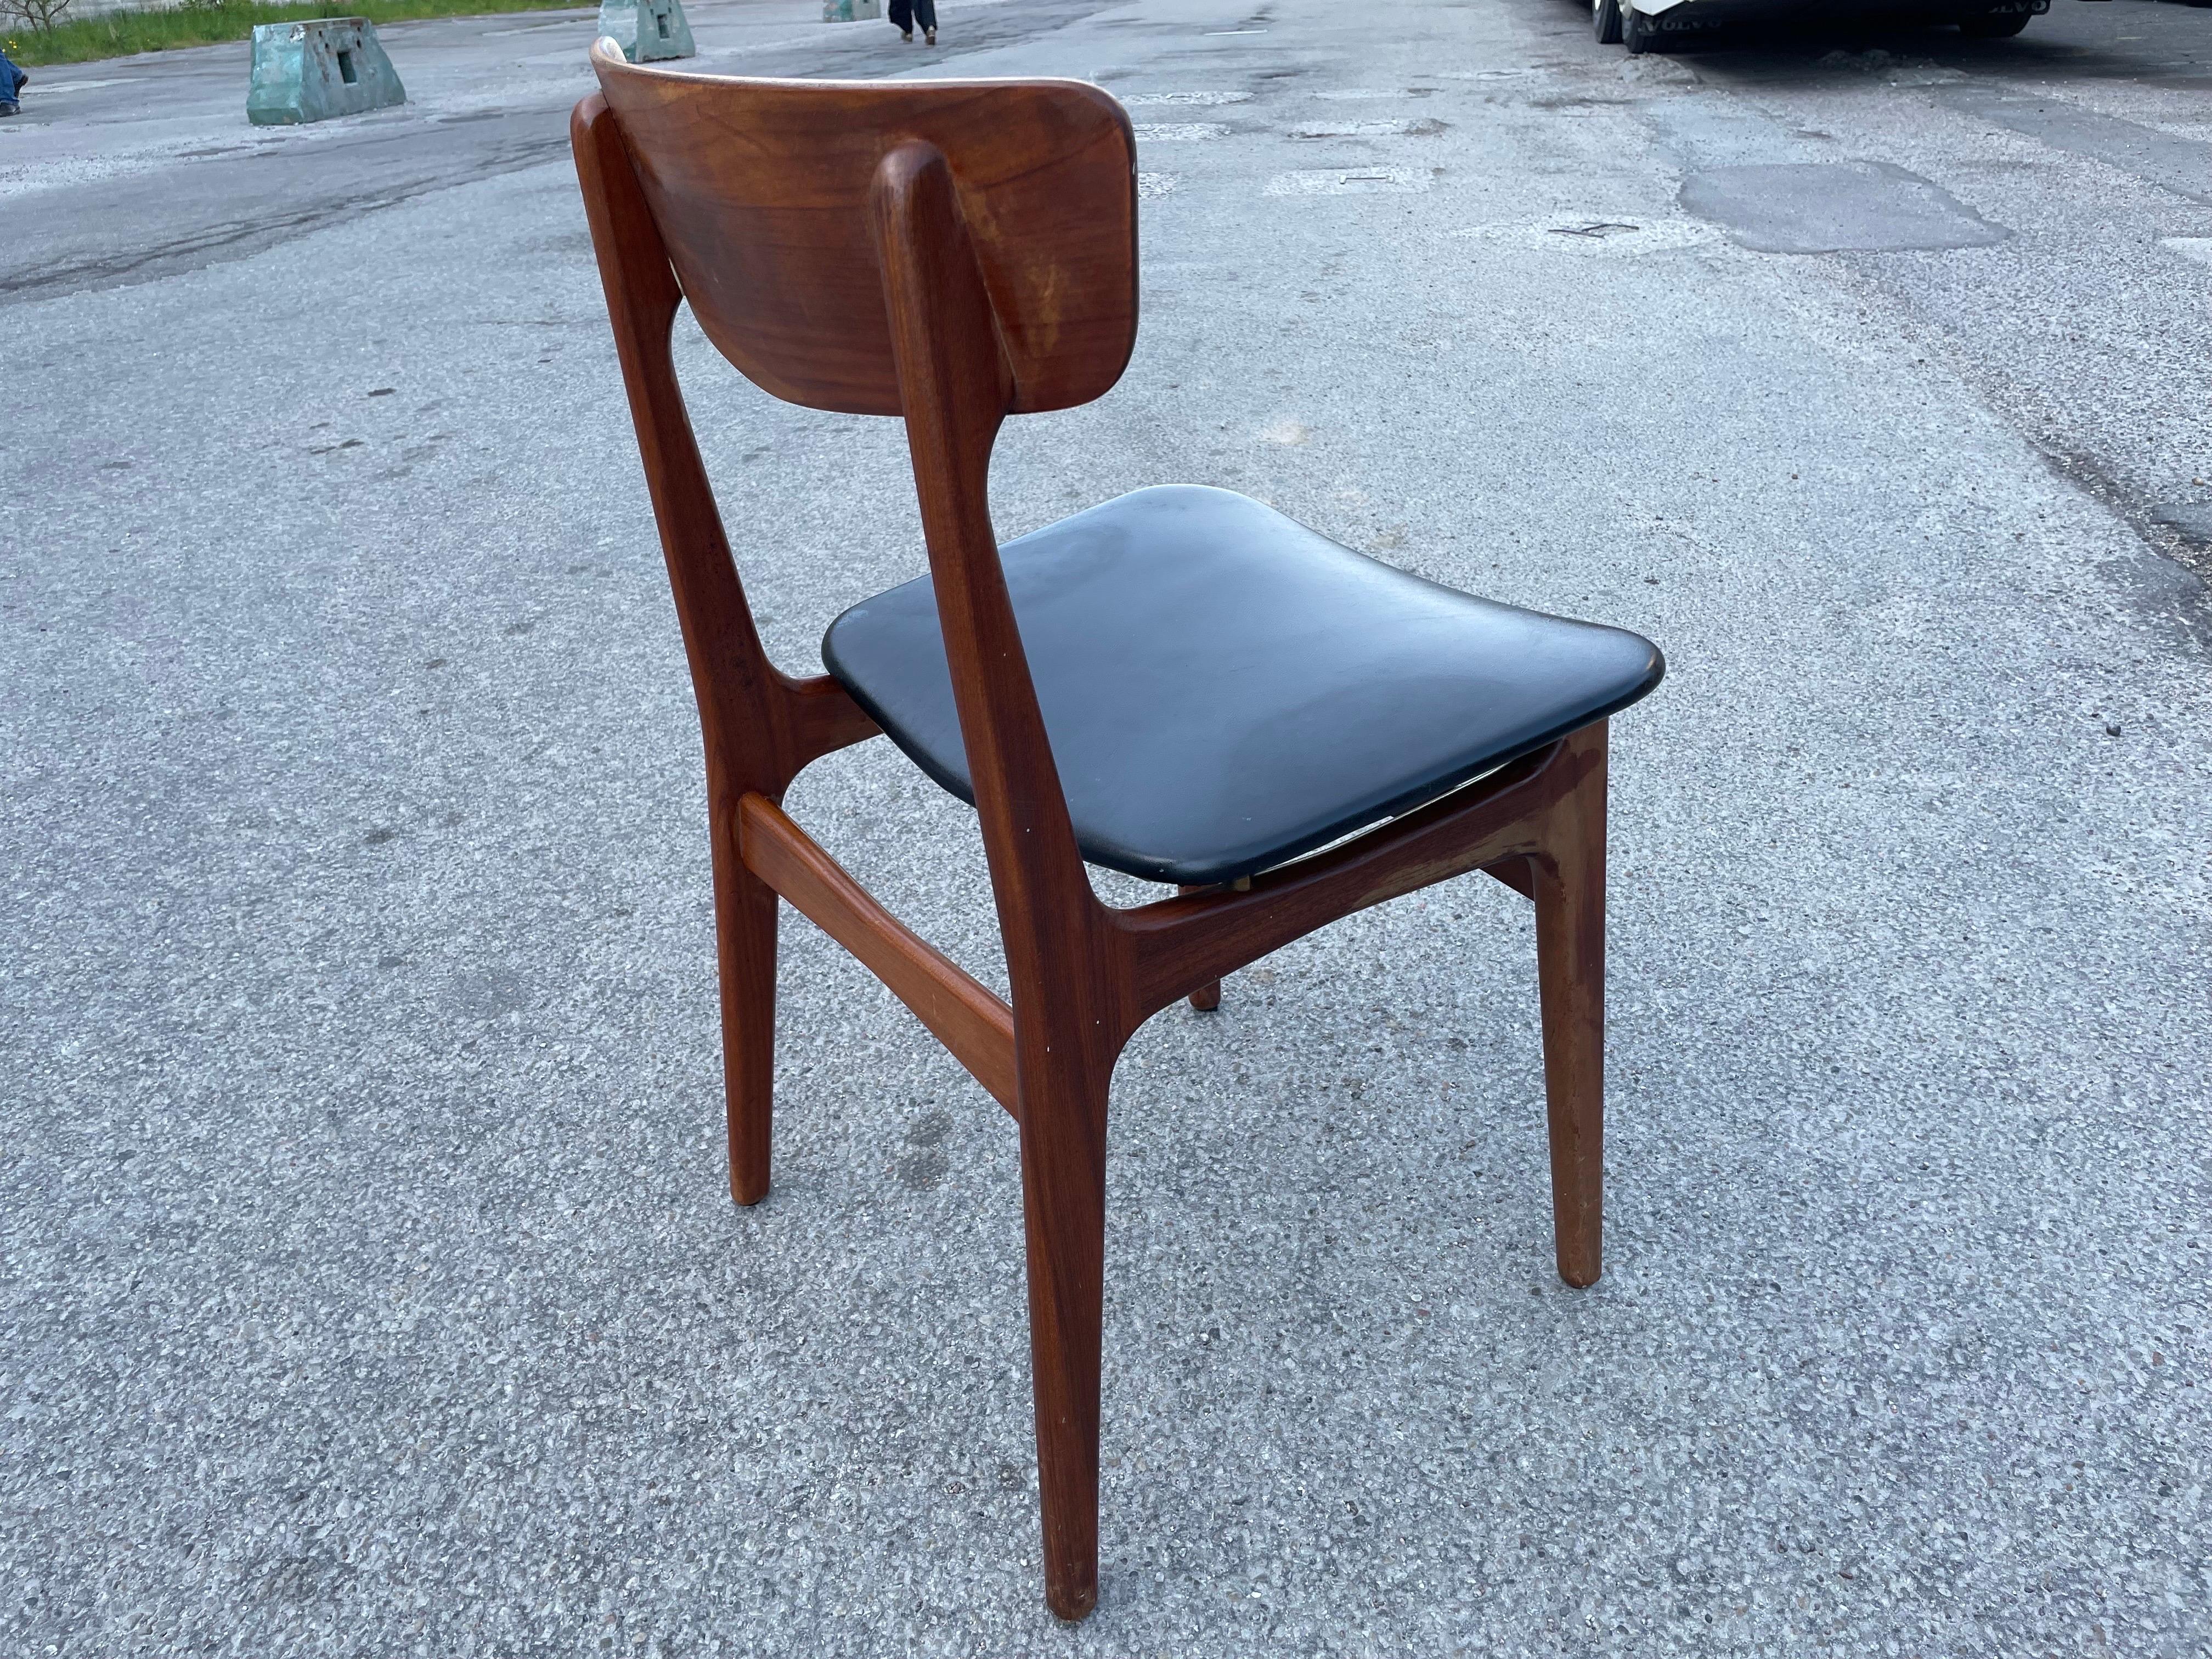 Set of 6 Midcentury Danish Chairs in Teak by Schiønning & Elgaard, 1960s For Sale 9